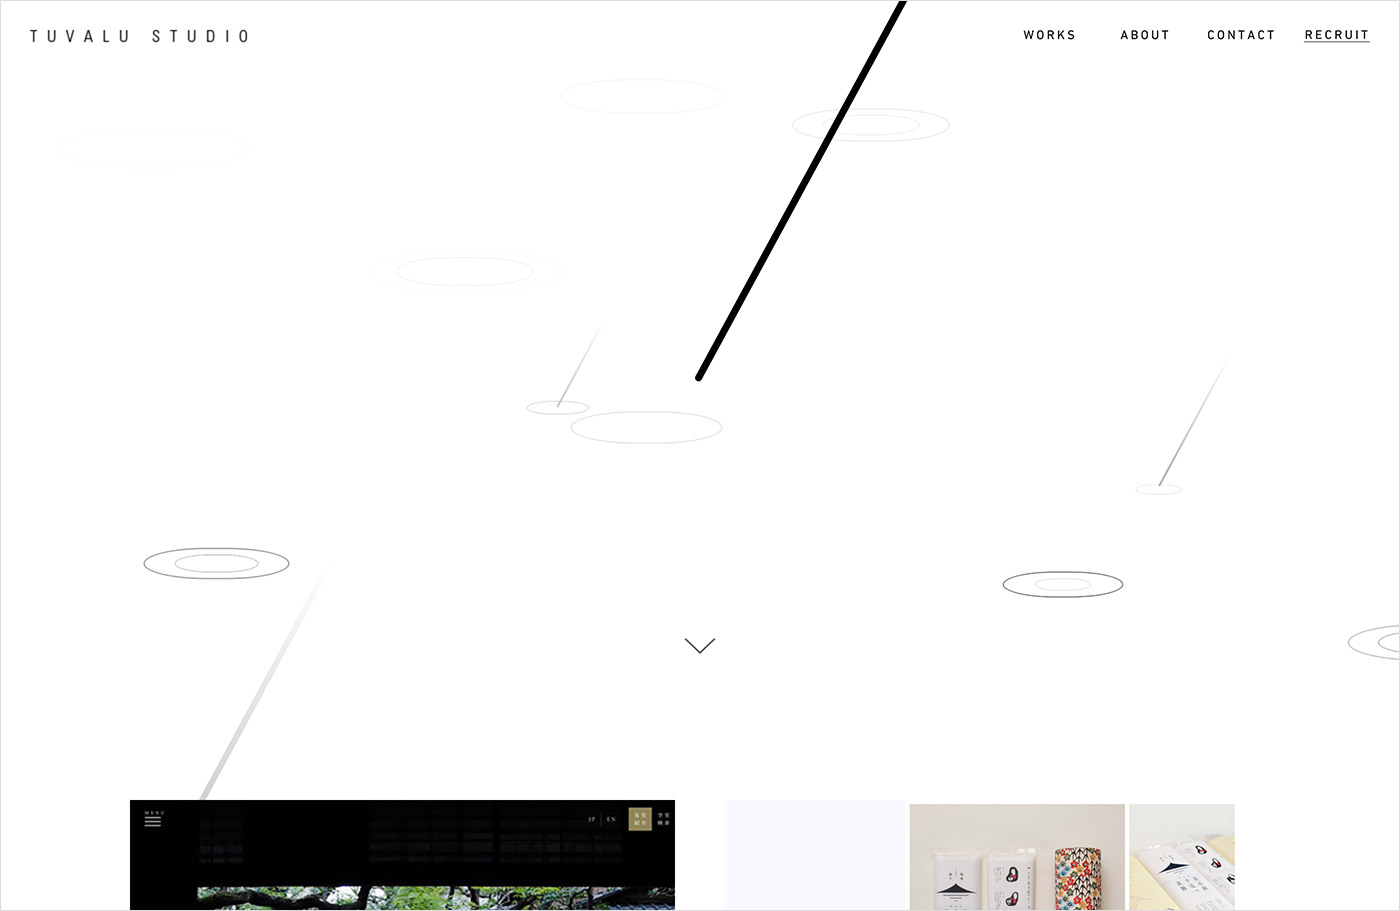 TUVALU STUDIOウェブサイトの画面キャプチャ画像